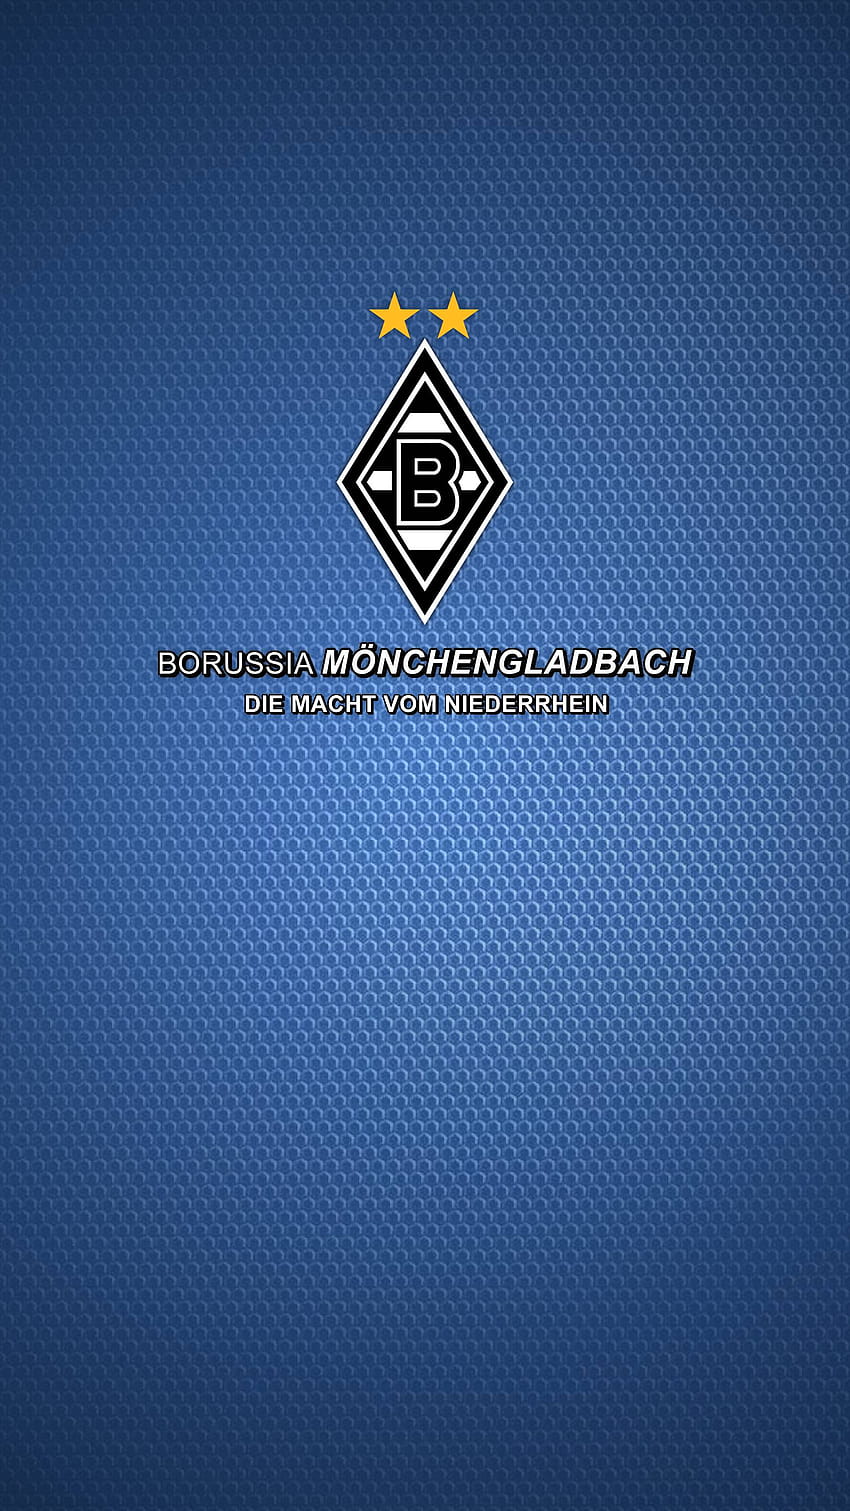 Samsung Borussia Monchengladbach HD phone wallpaper